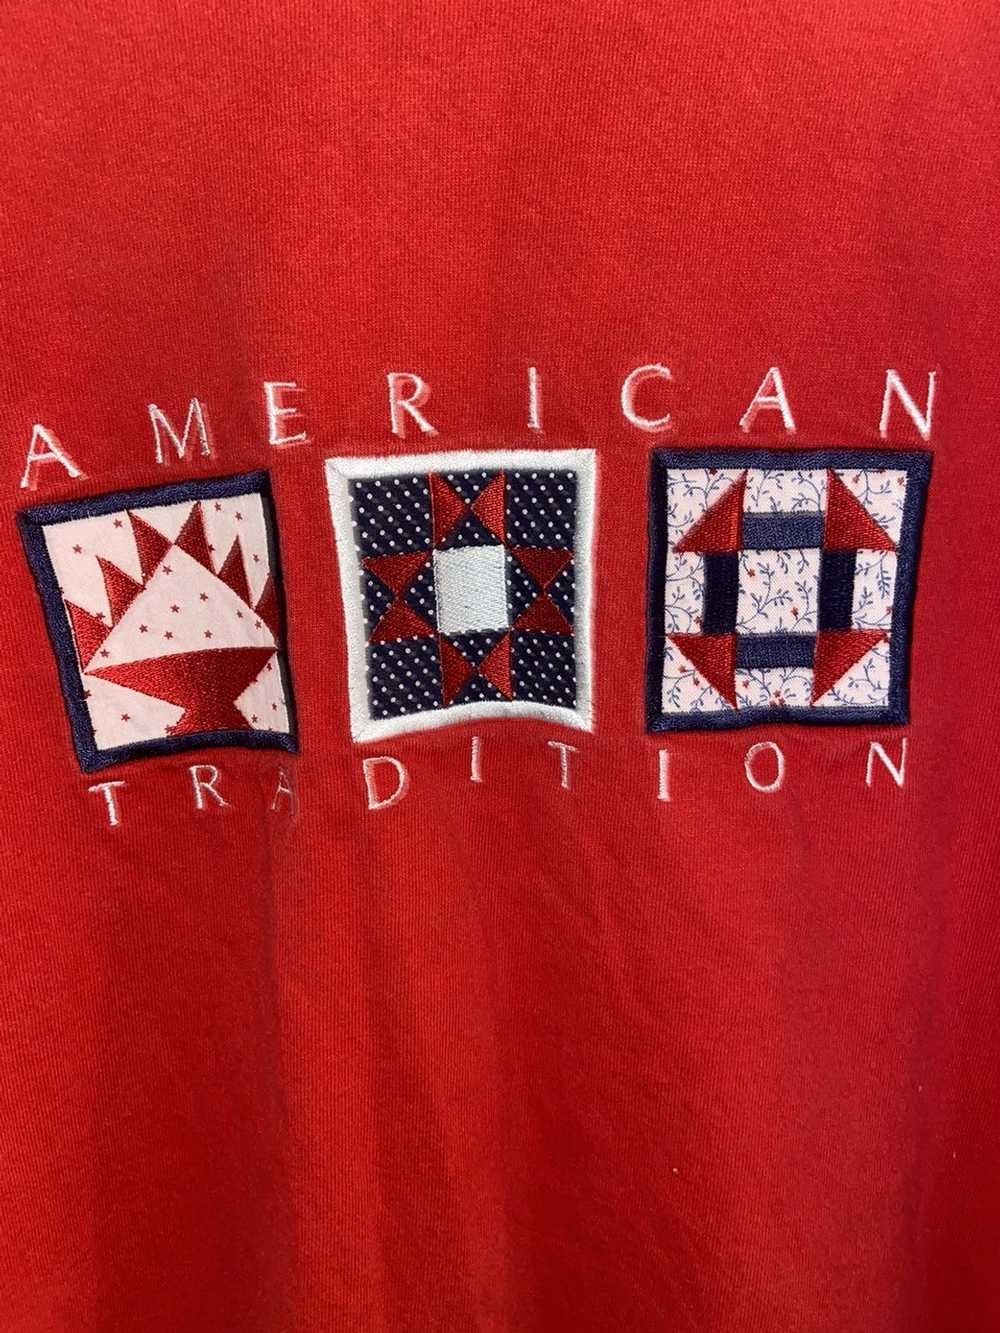 Vintage American Tradition Vintage Tee Shirt - image 3